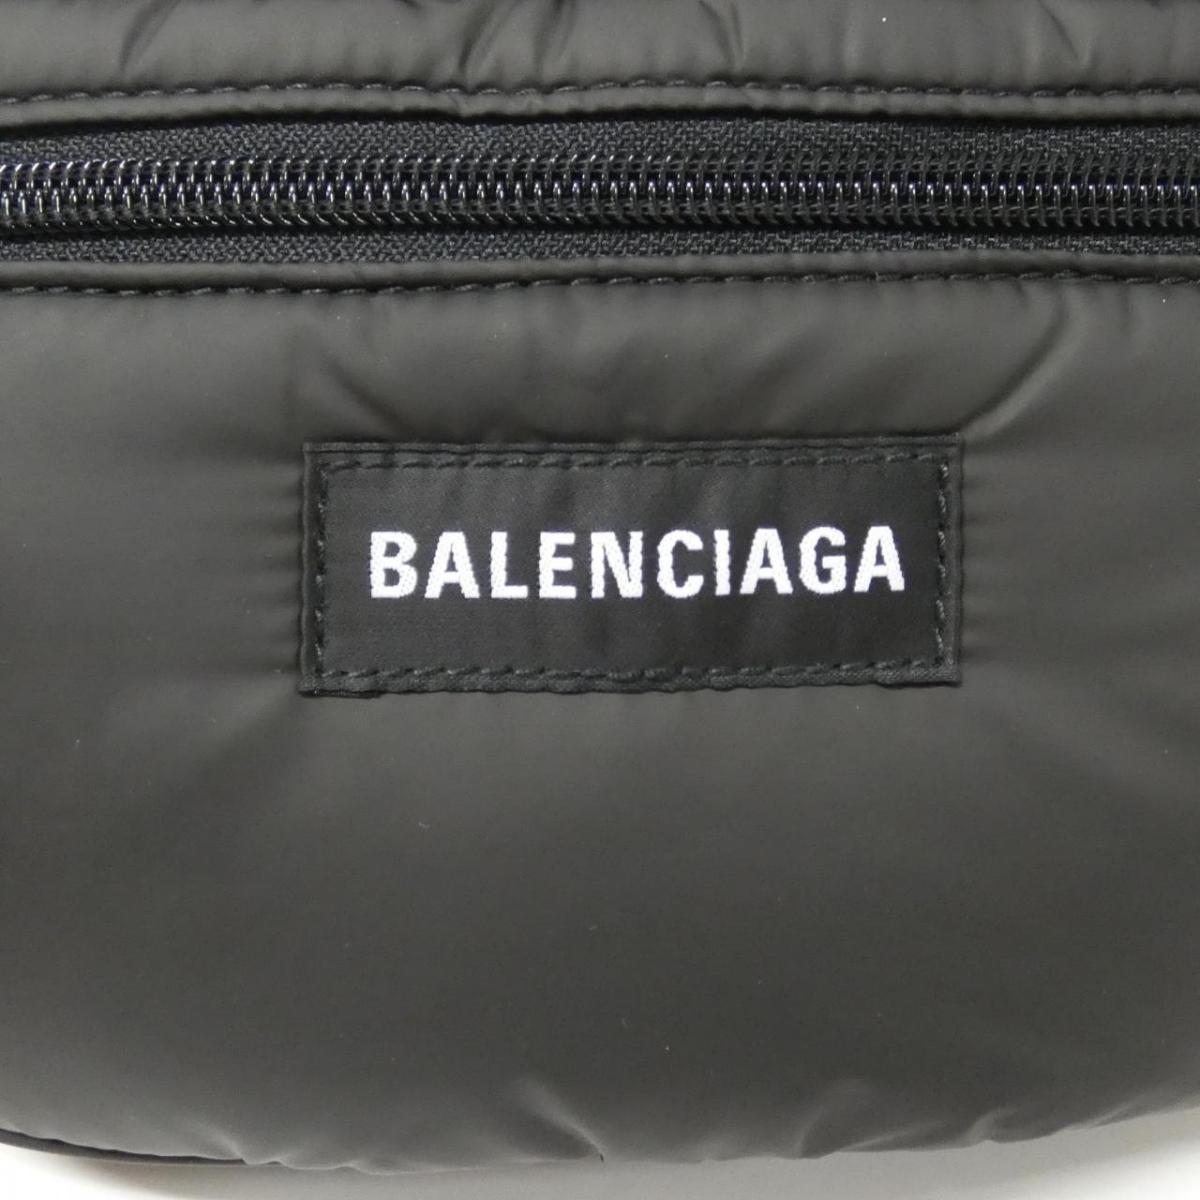 Balenciaga Explorers Belt Pack 482389 2AAMA Waistbags